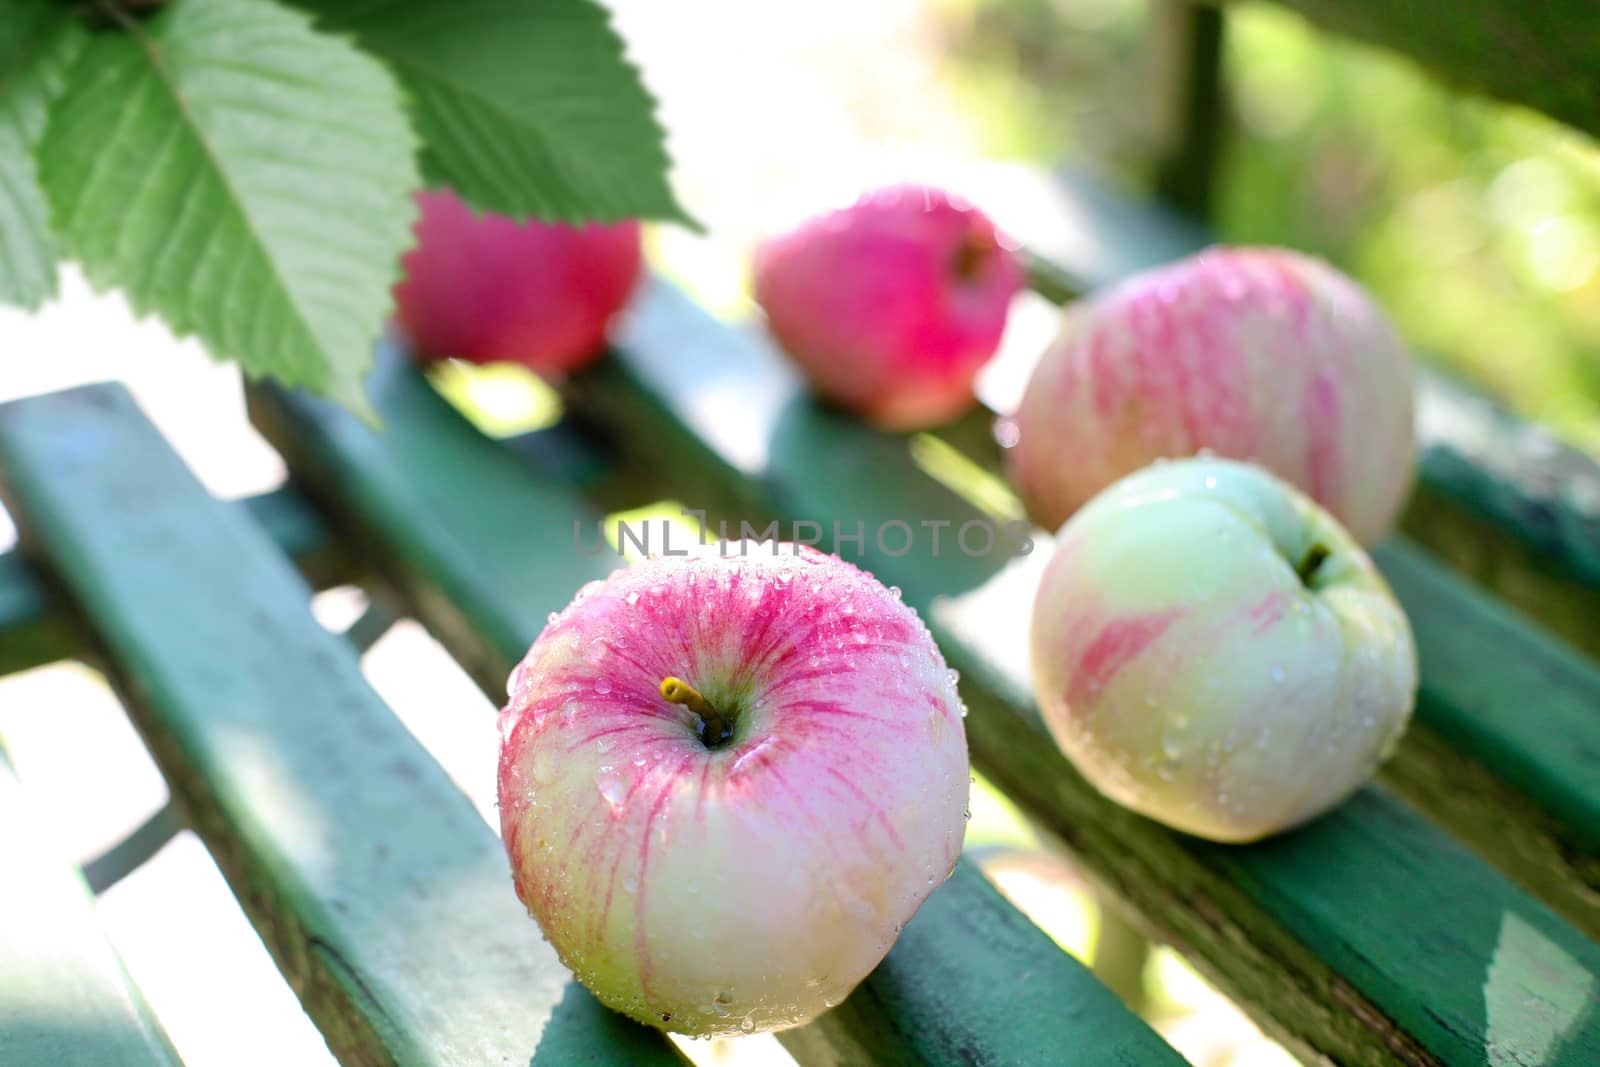 Ripe wet apples on bench by yurii_bizgaimer